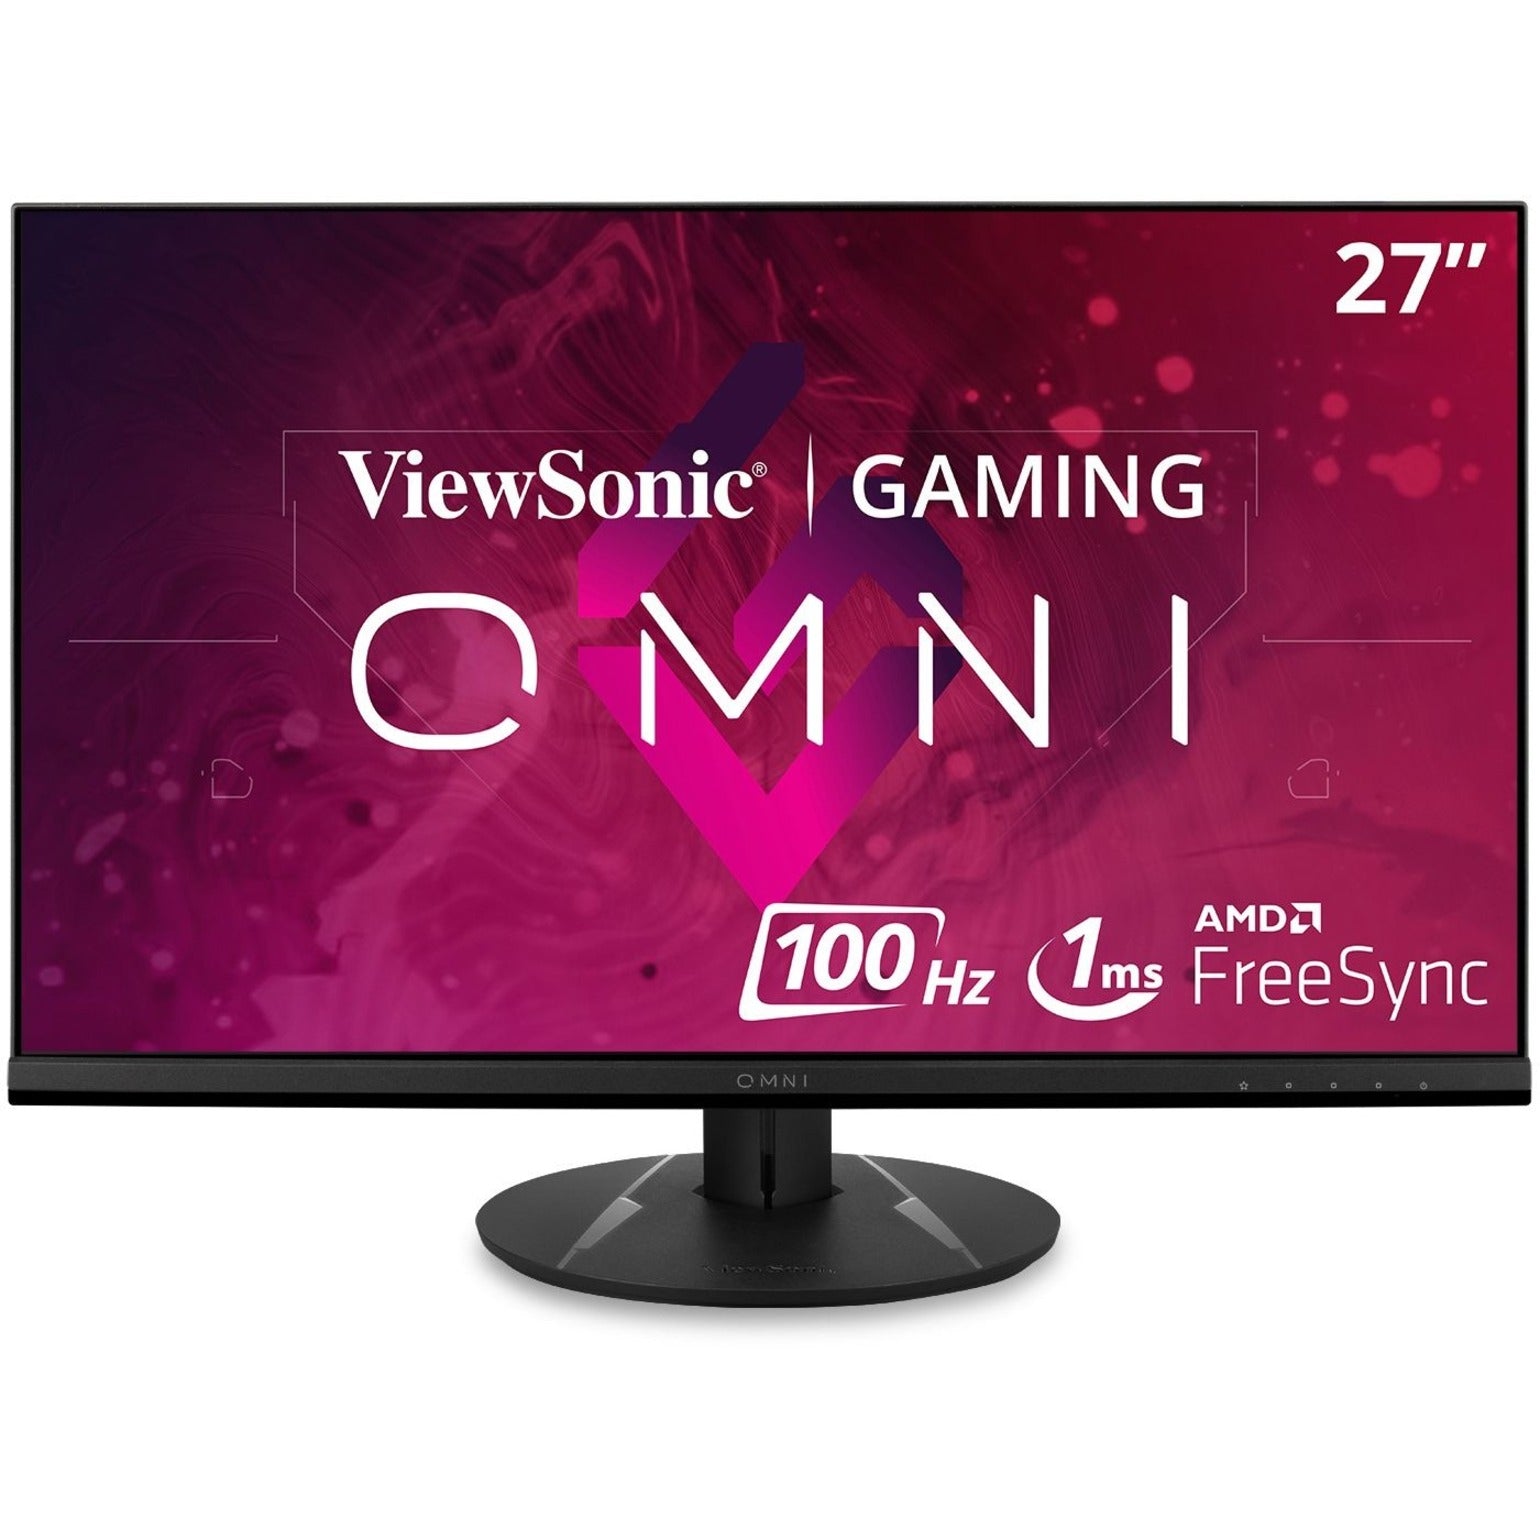 ViewSonic VX2716 27 Gaming Monitor, Full HD, 1ms Response Time, FreeSync